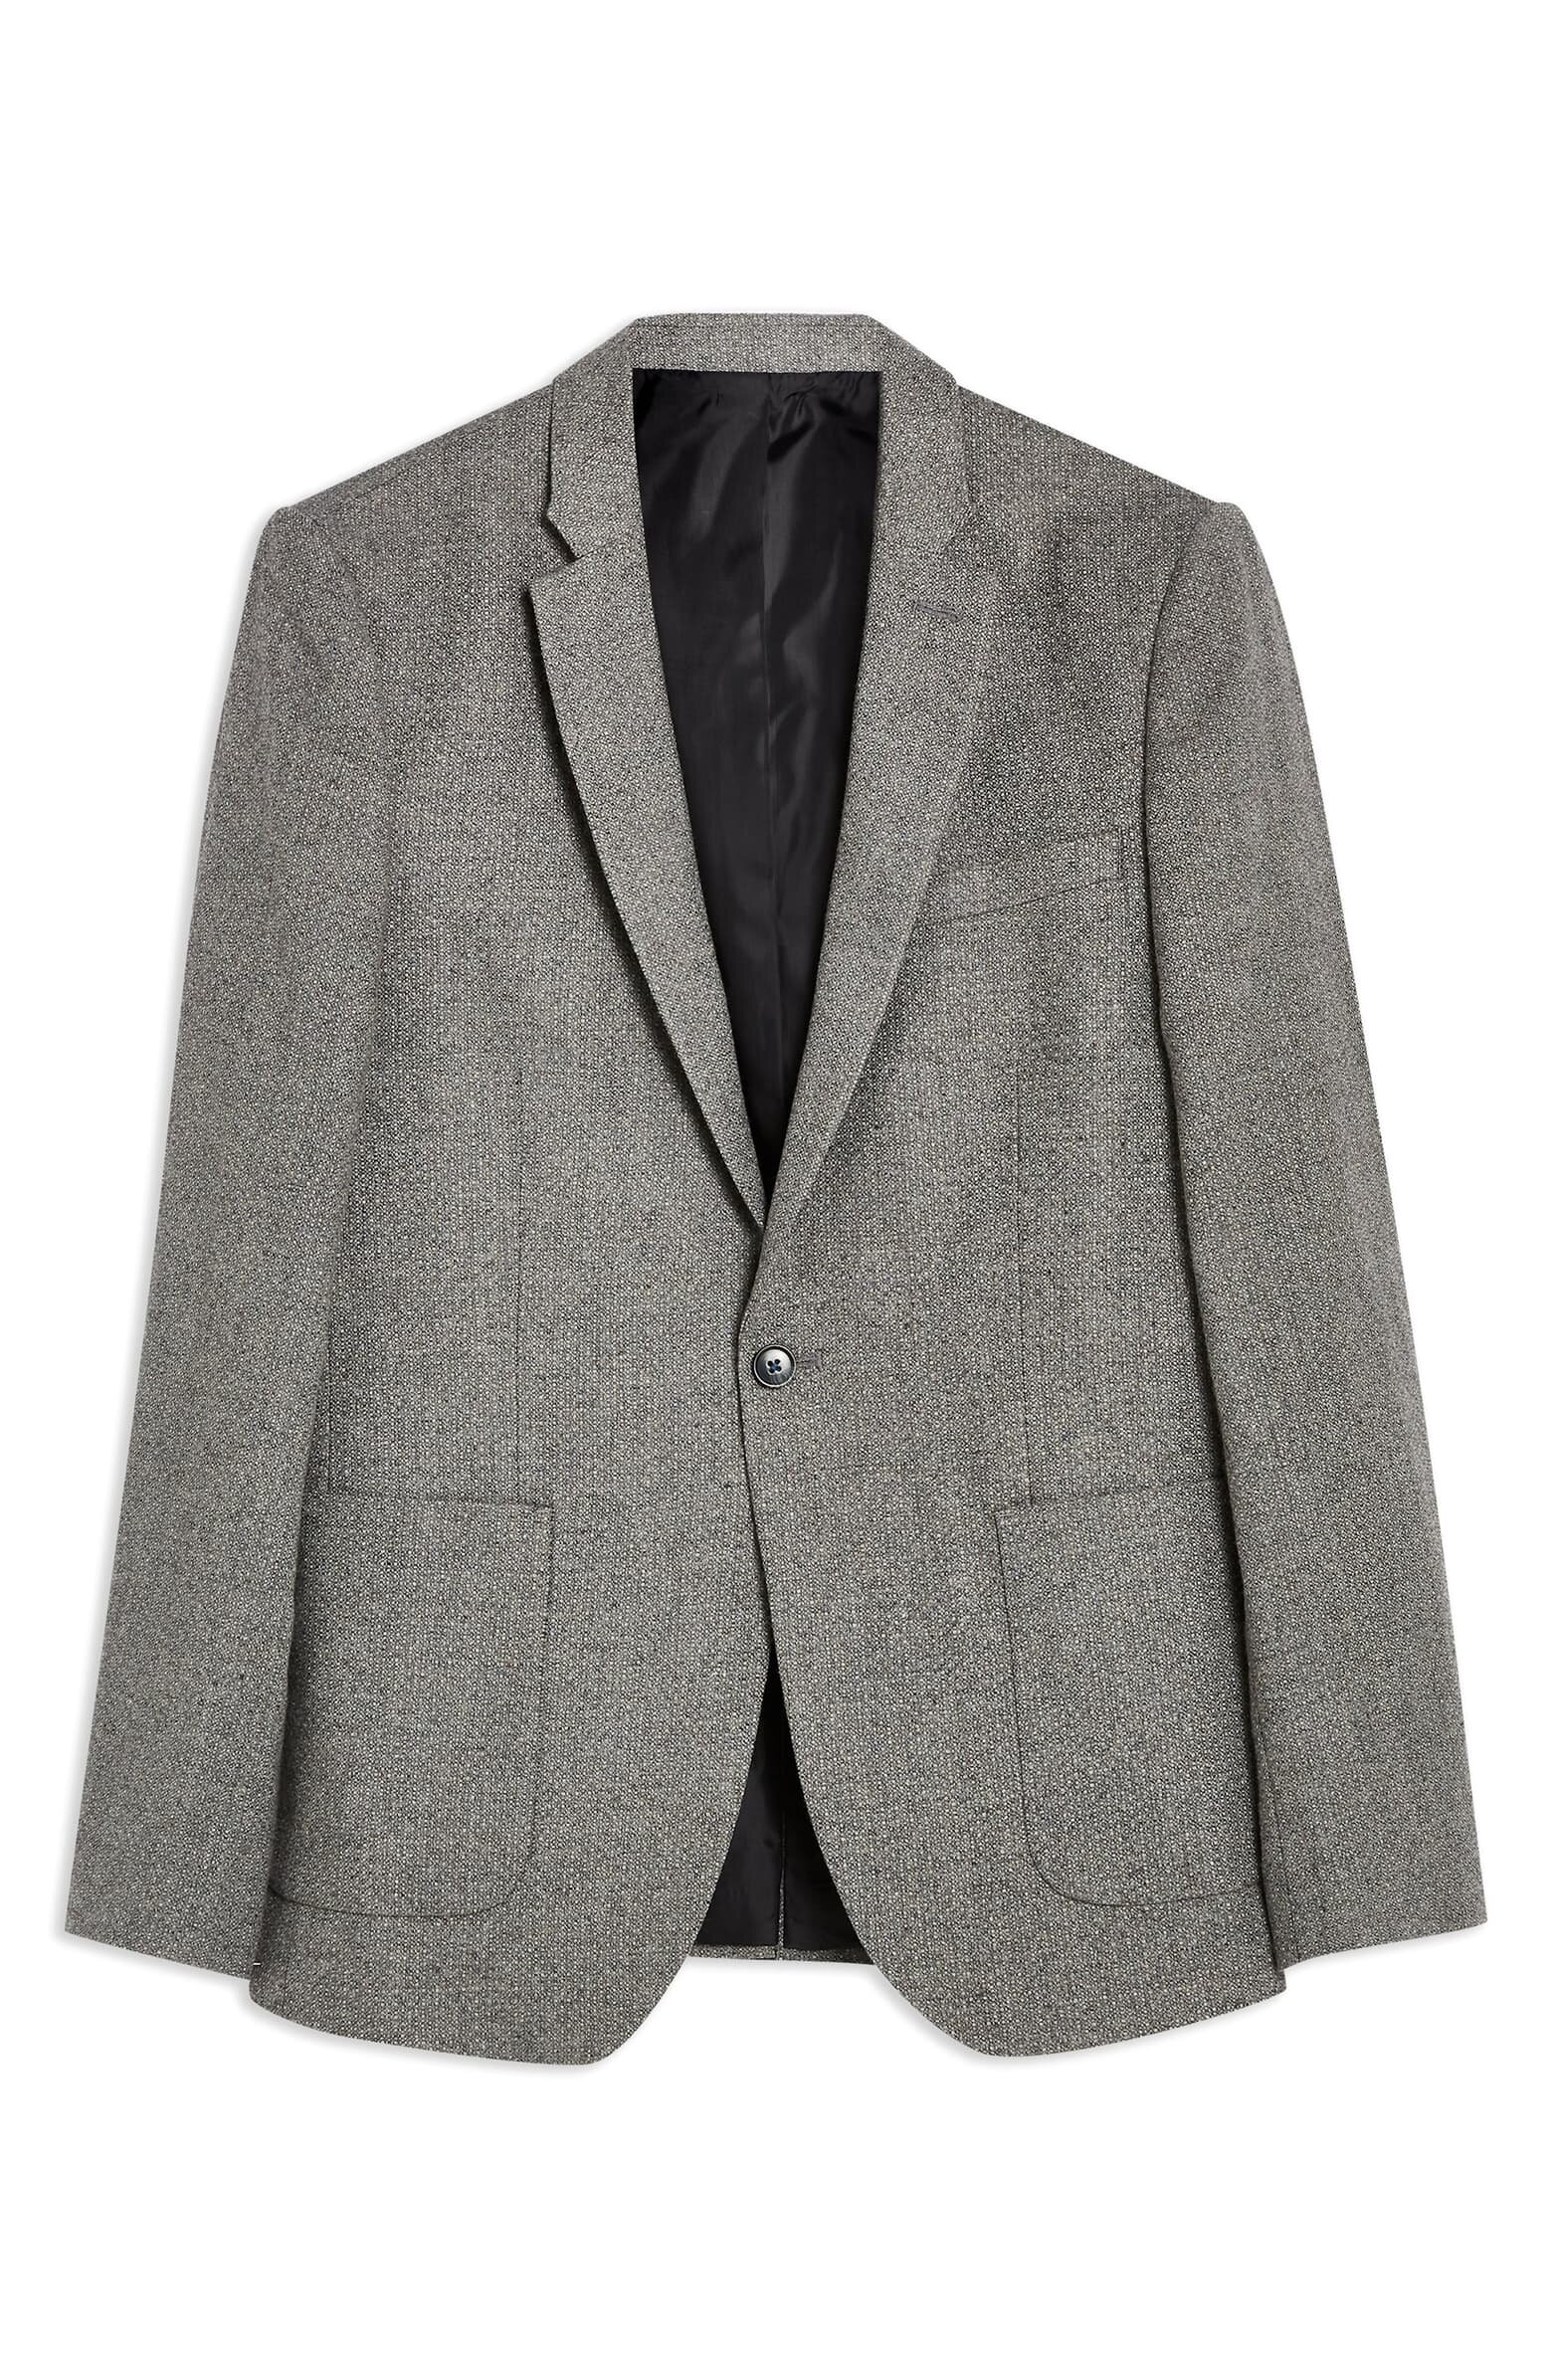 topman tweed blazer- gray.jpeg